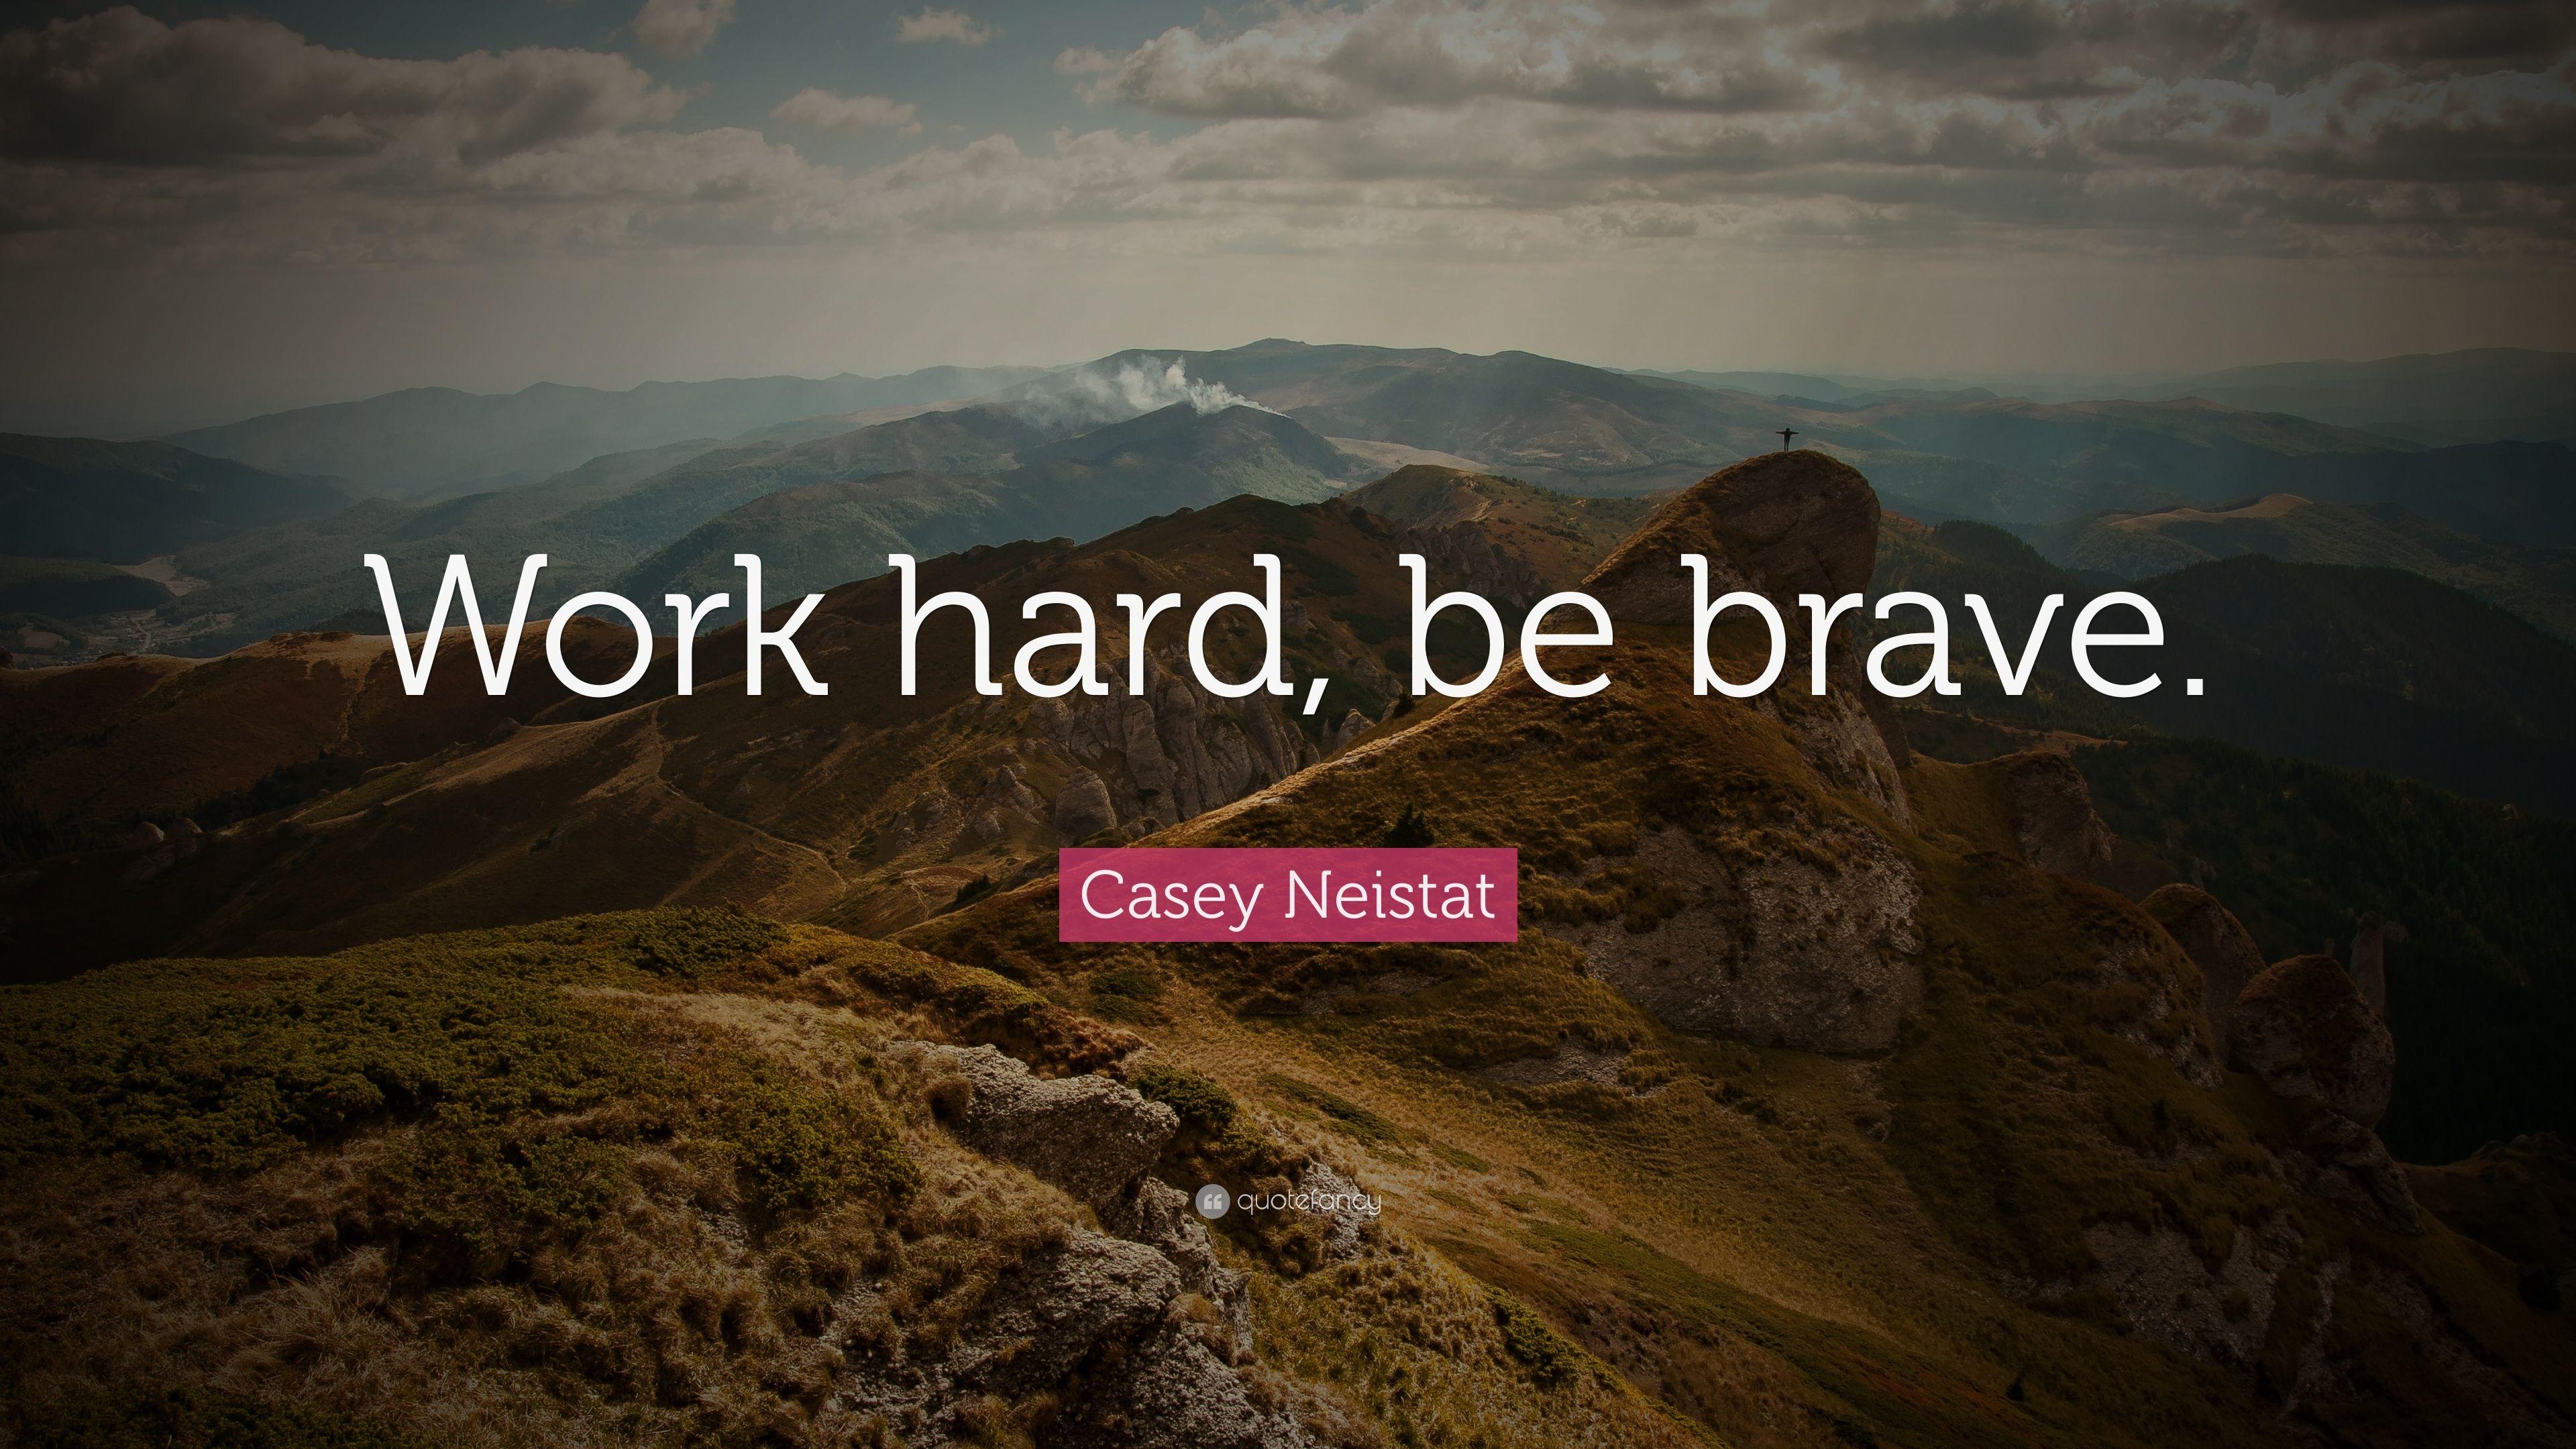 Casey Neistat Quote: “Work hard, be brave.” 24 wallpaper